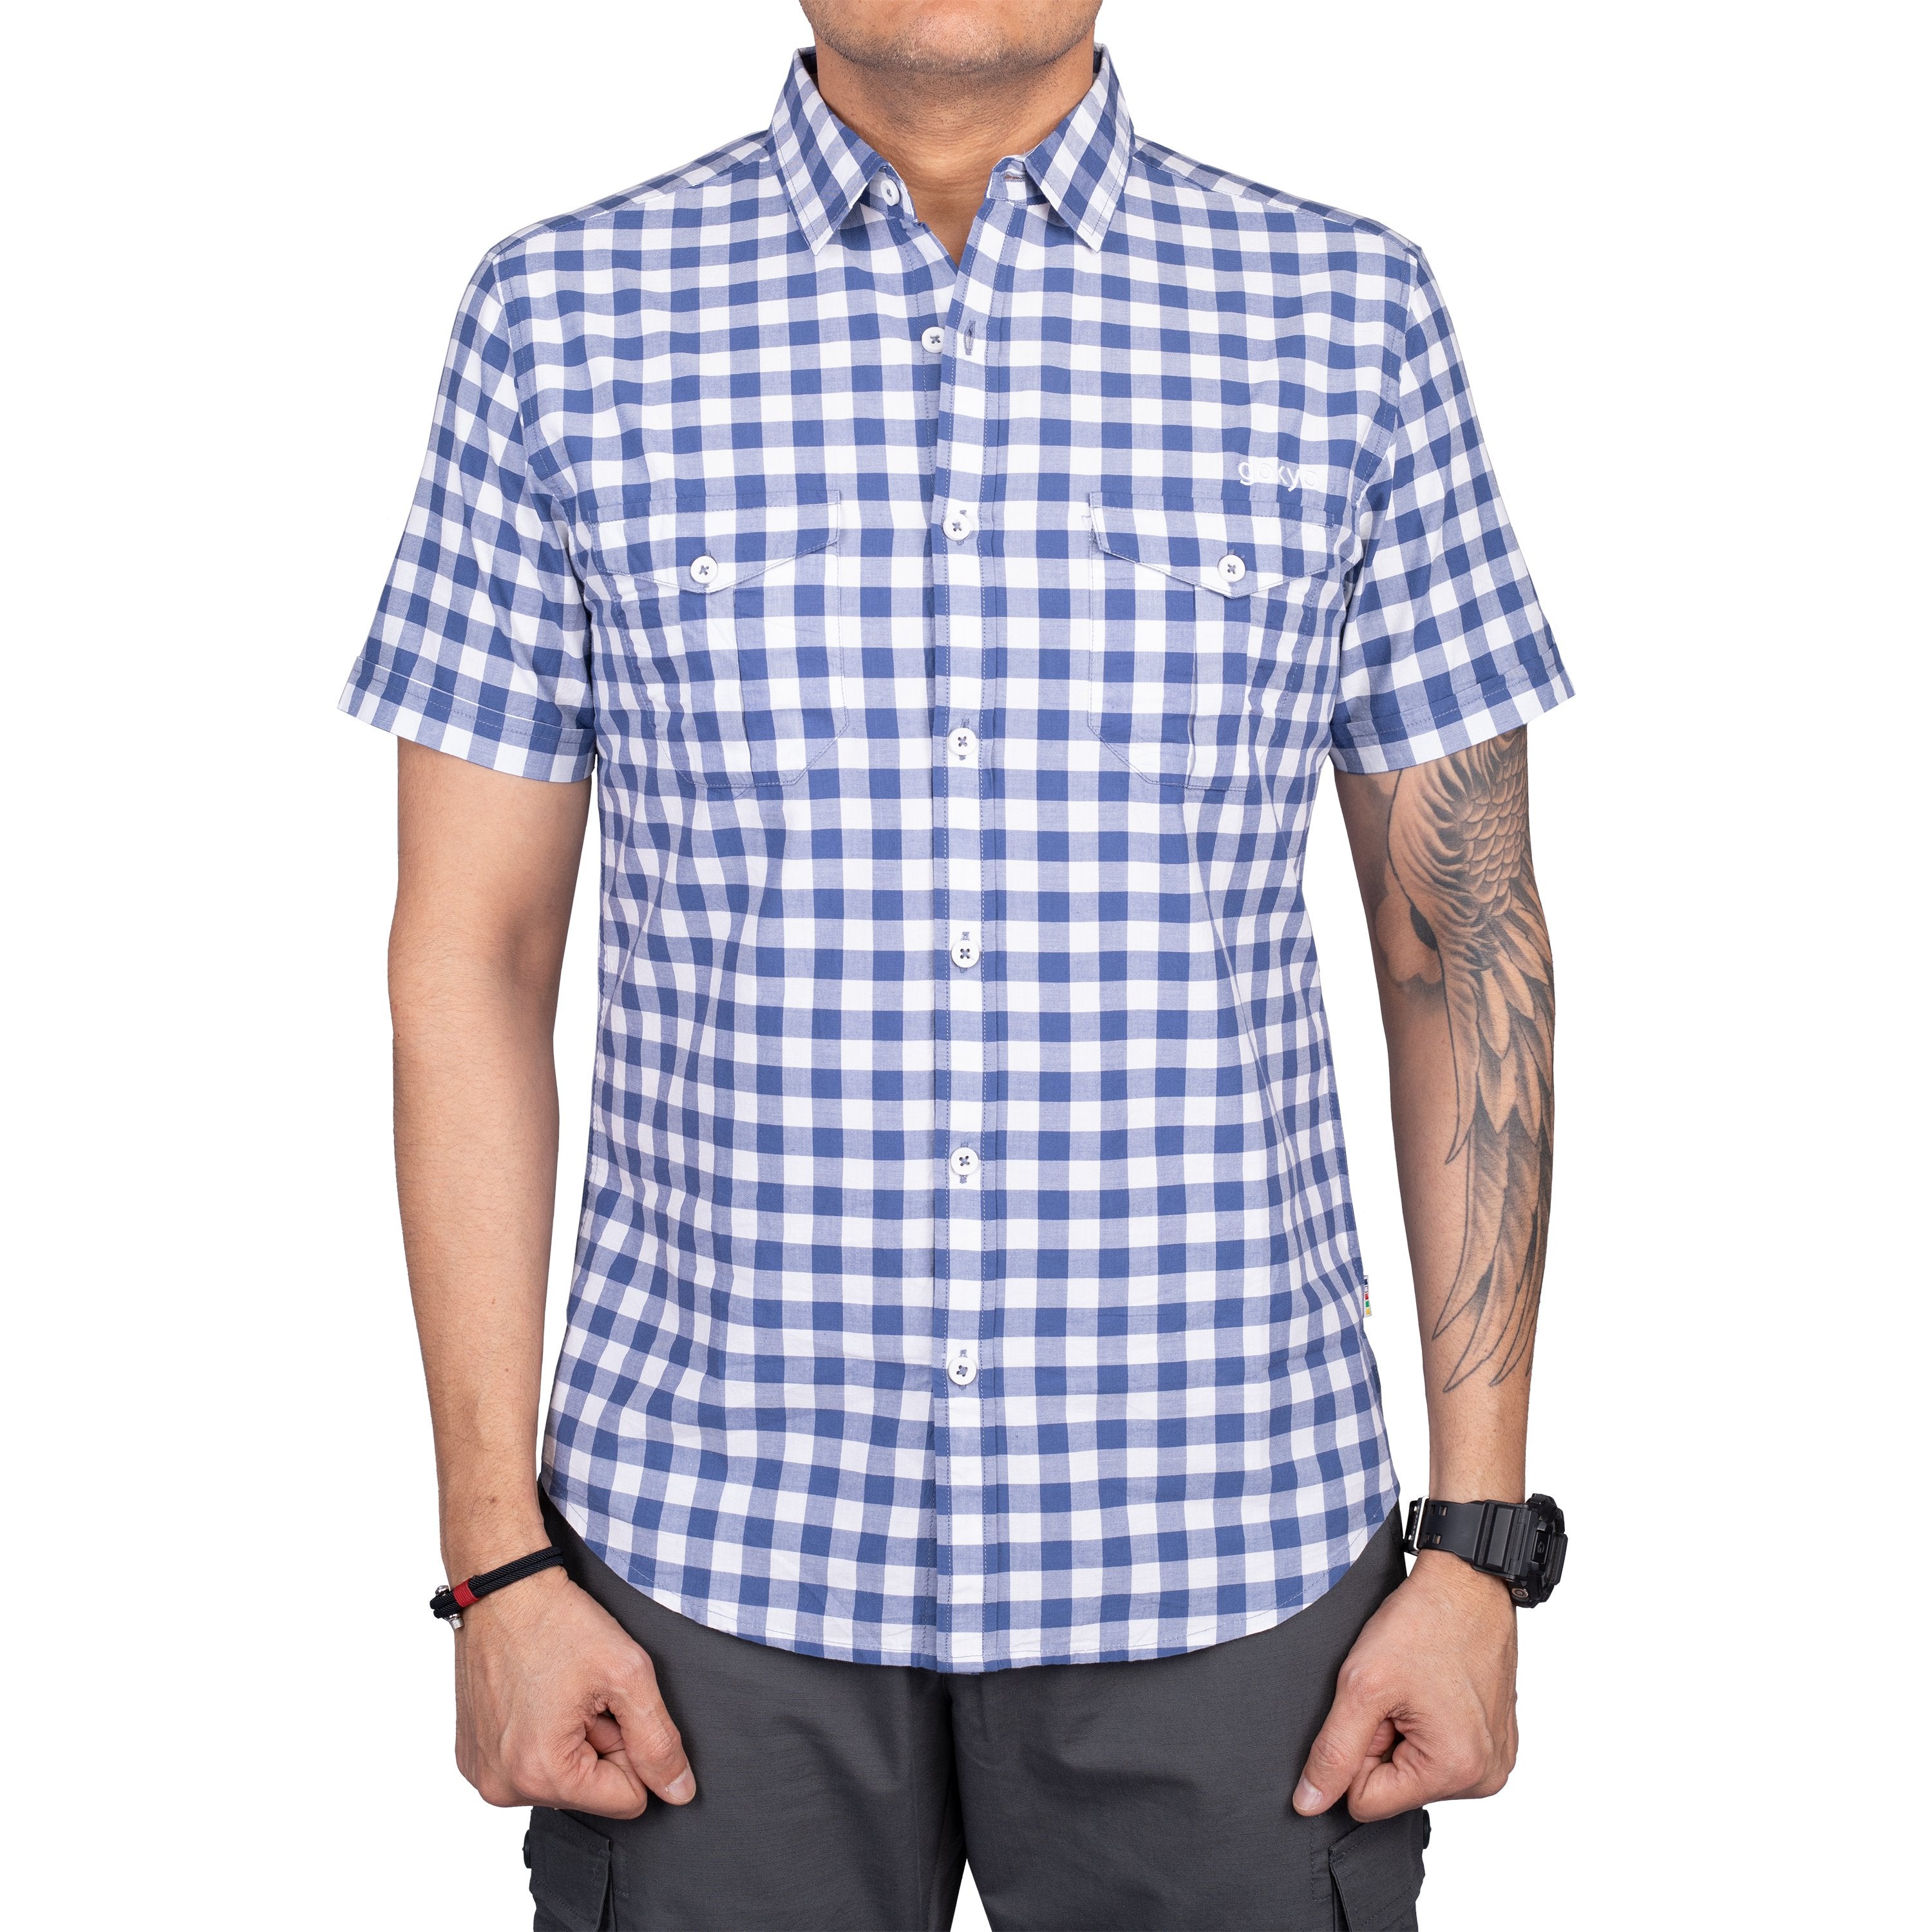 Buy Corbett Cargo Half Sleeve Shirt Blue at Gokyo Outdoor Clothing & Gear